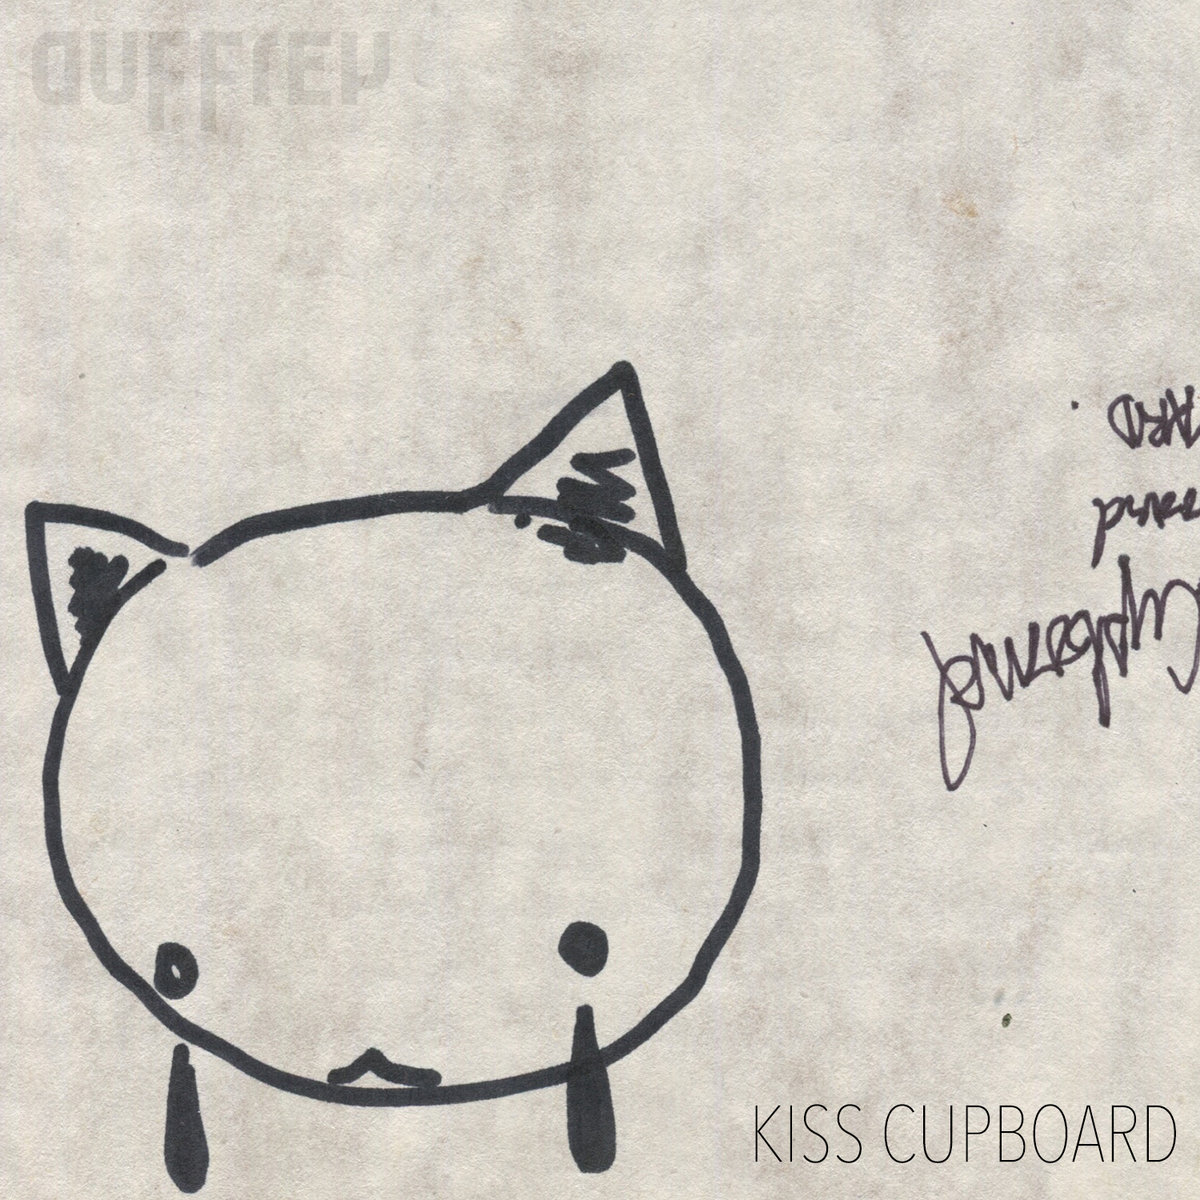 Duffrey - Kiss Cupboard